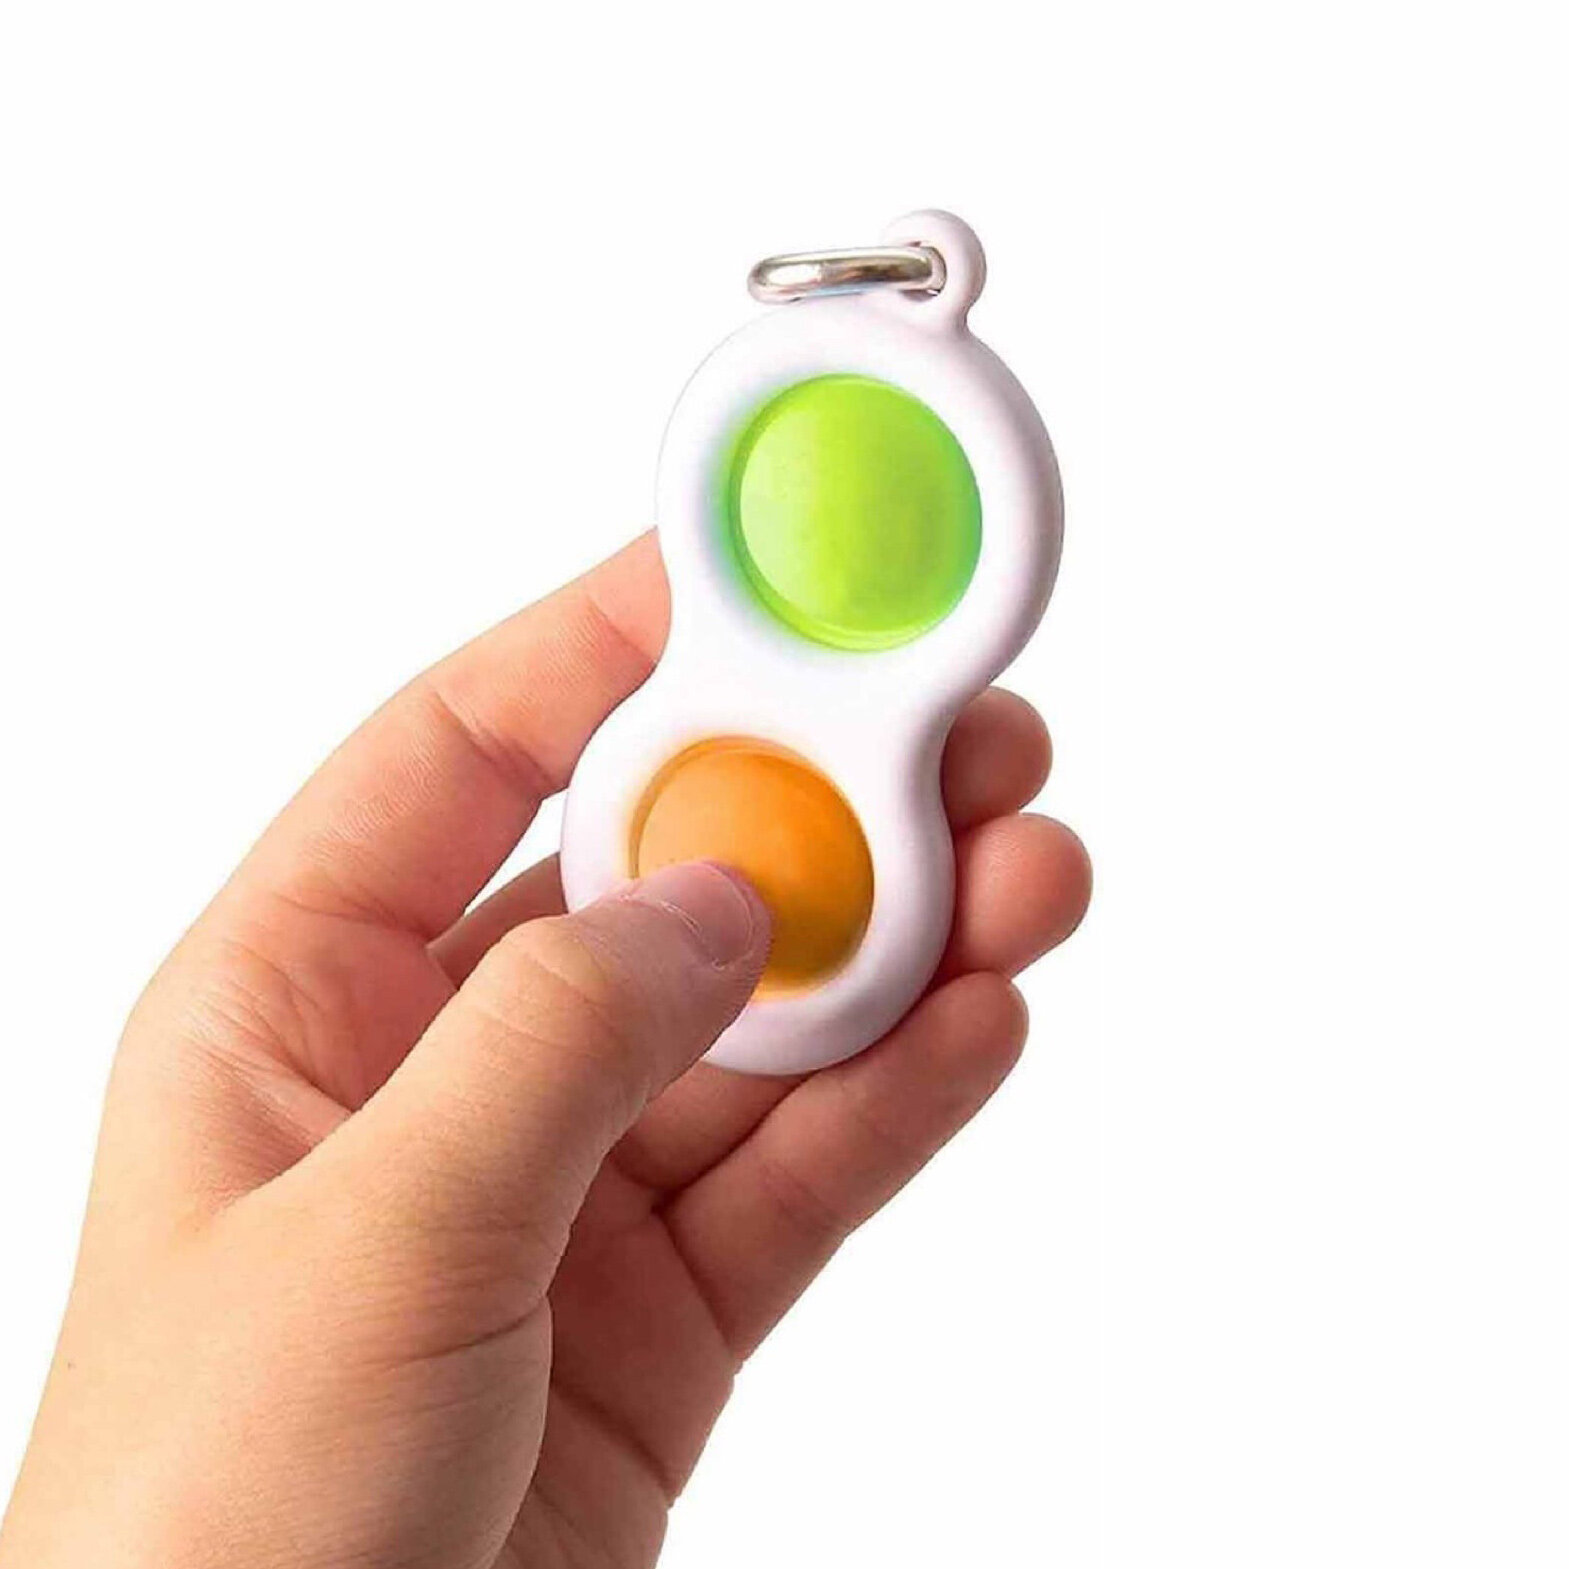 

Mini Simple Dimple Sensory Mini Sensory Fidget Relaxation Stress Relief Anti-Anxiety Autism Hand EDC Gadget for Kids Tee